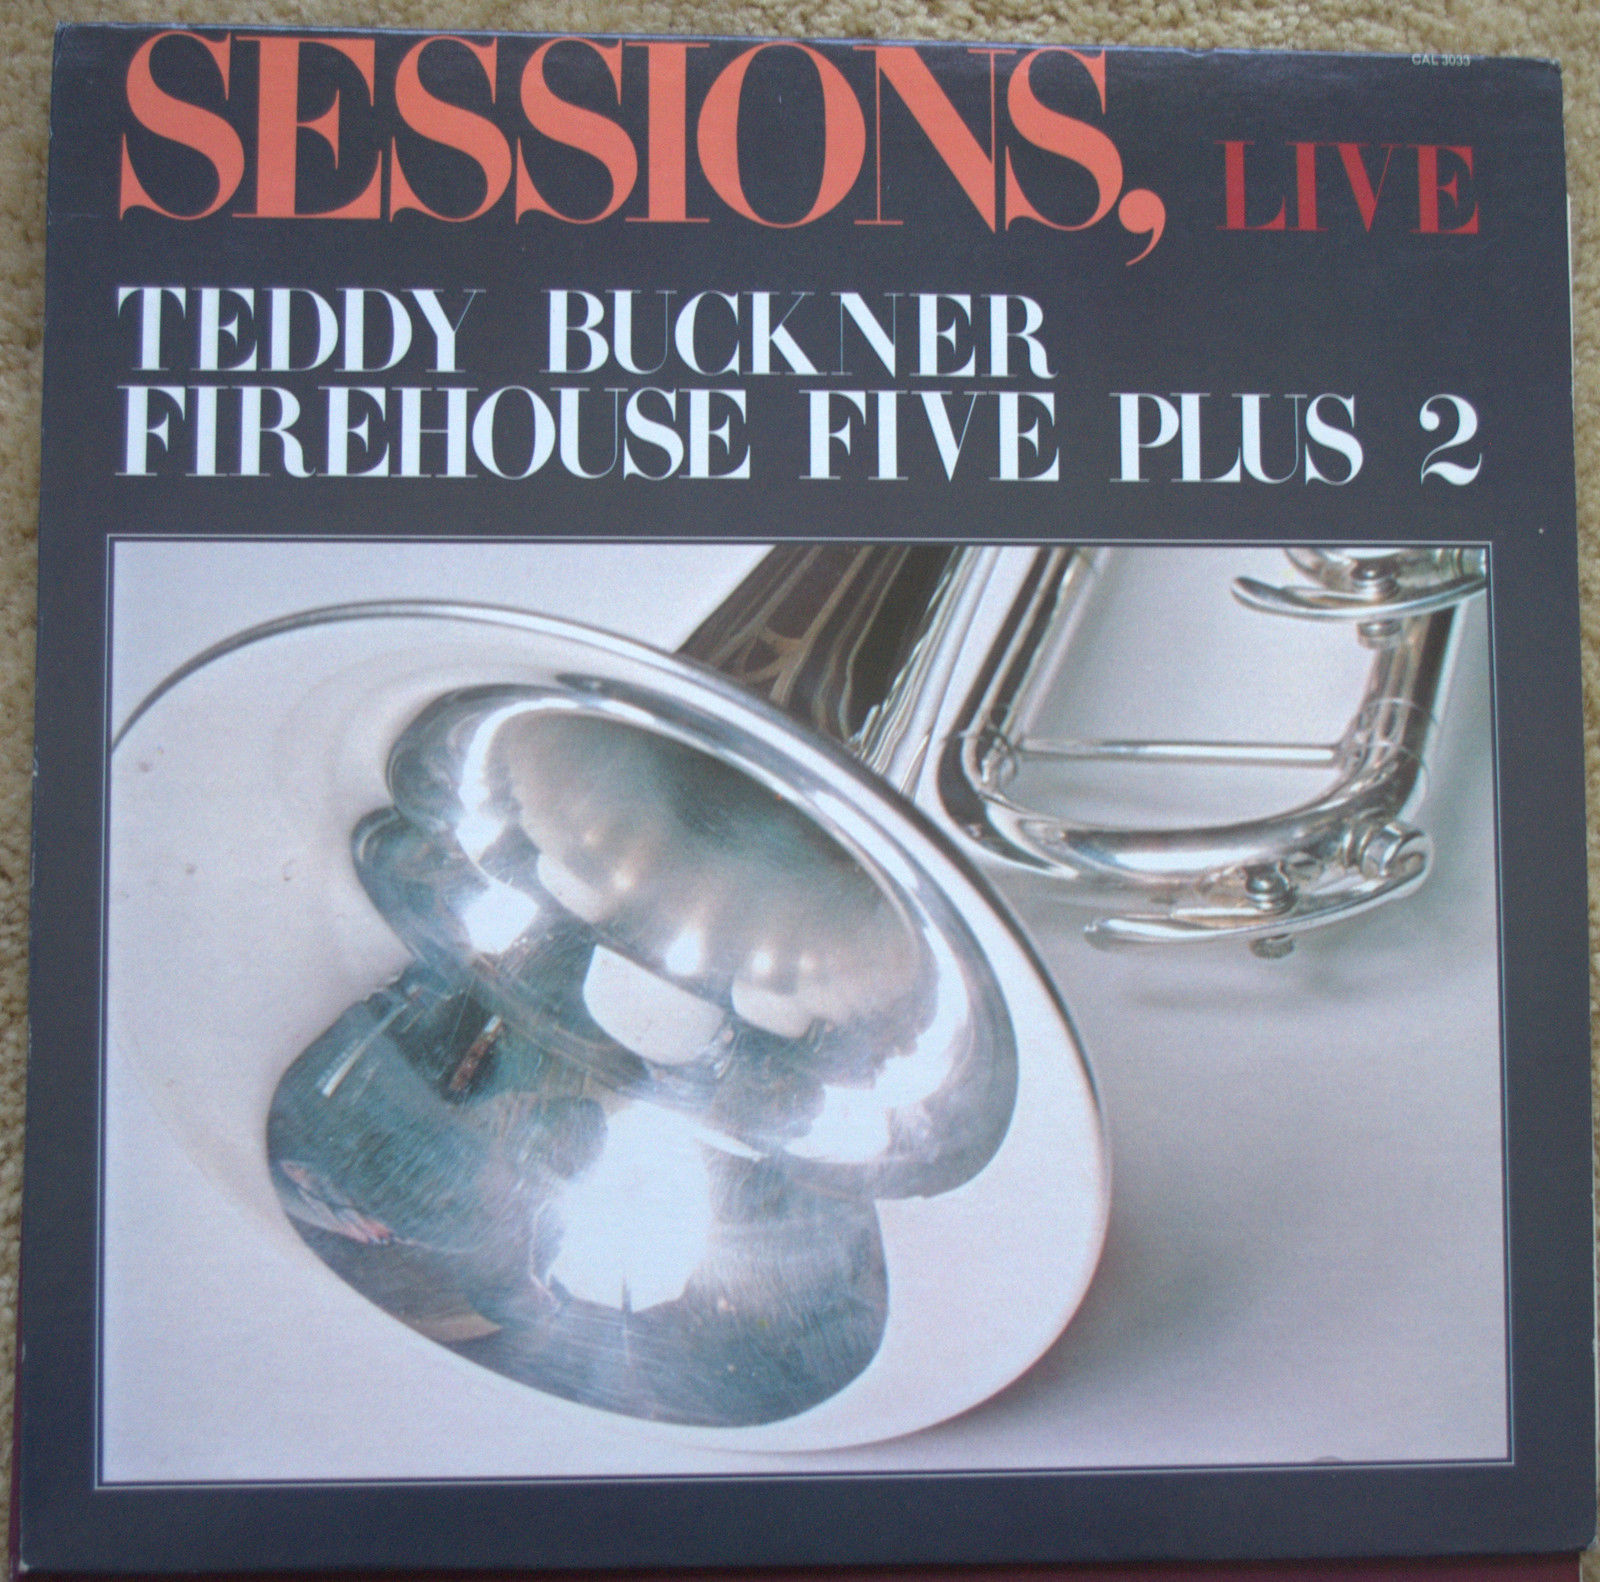 TEDDY BUCKNER - Sessions Live, Teddy Buckner/Firehouse Five Plus 2 cover 